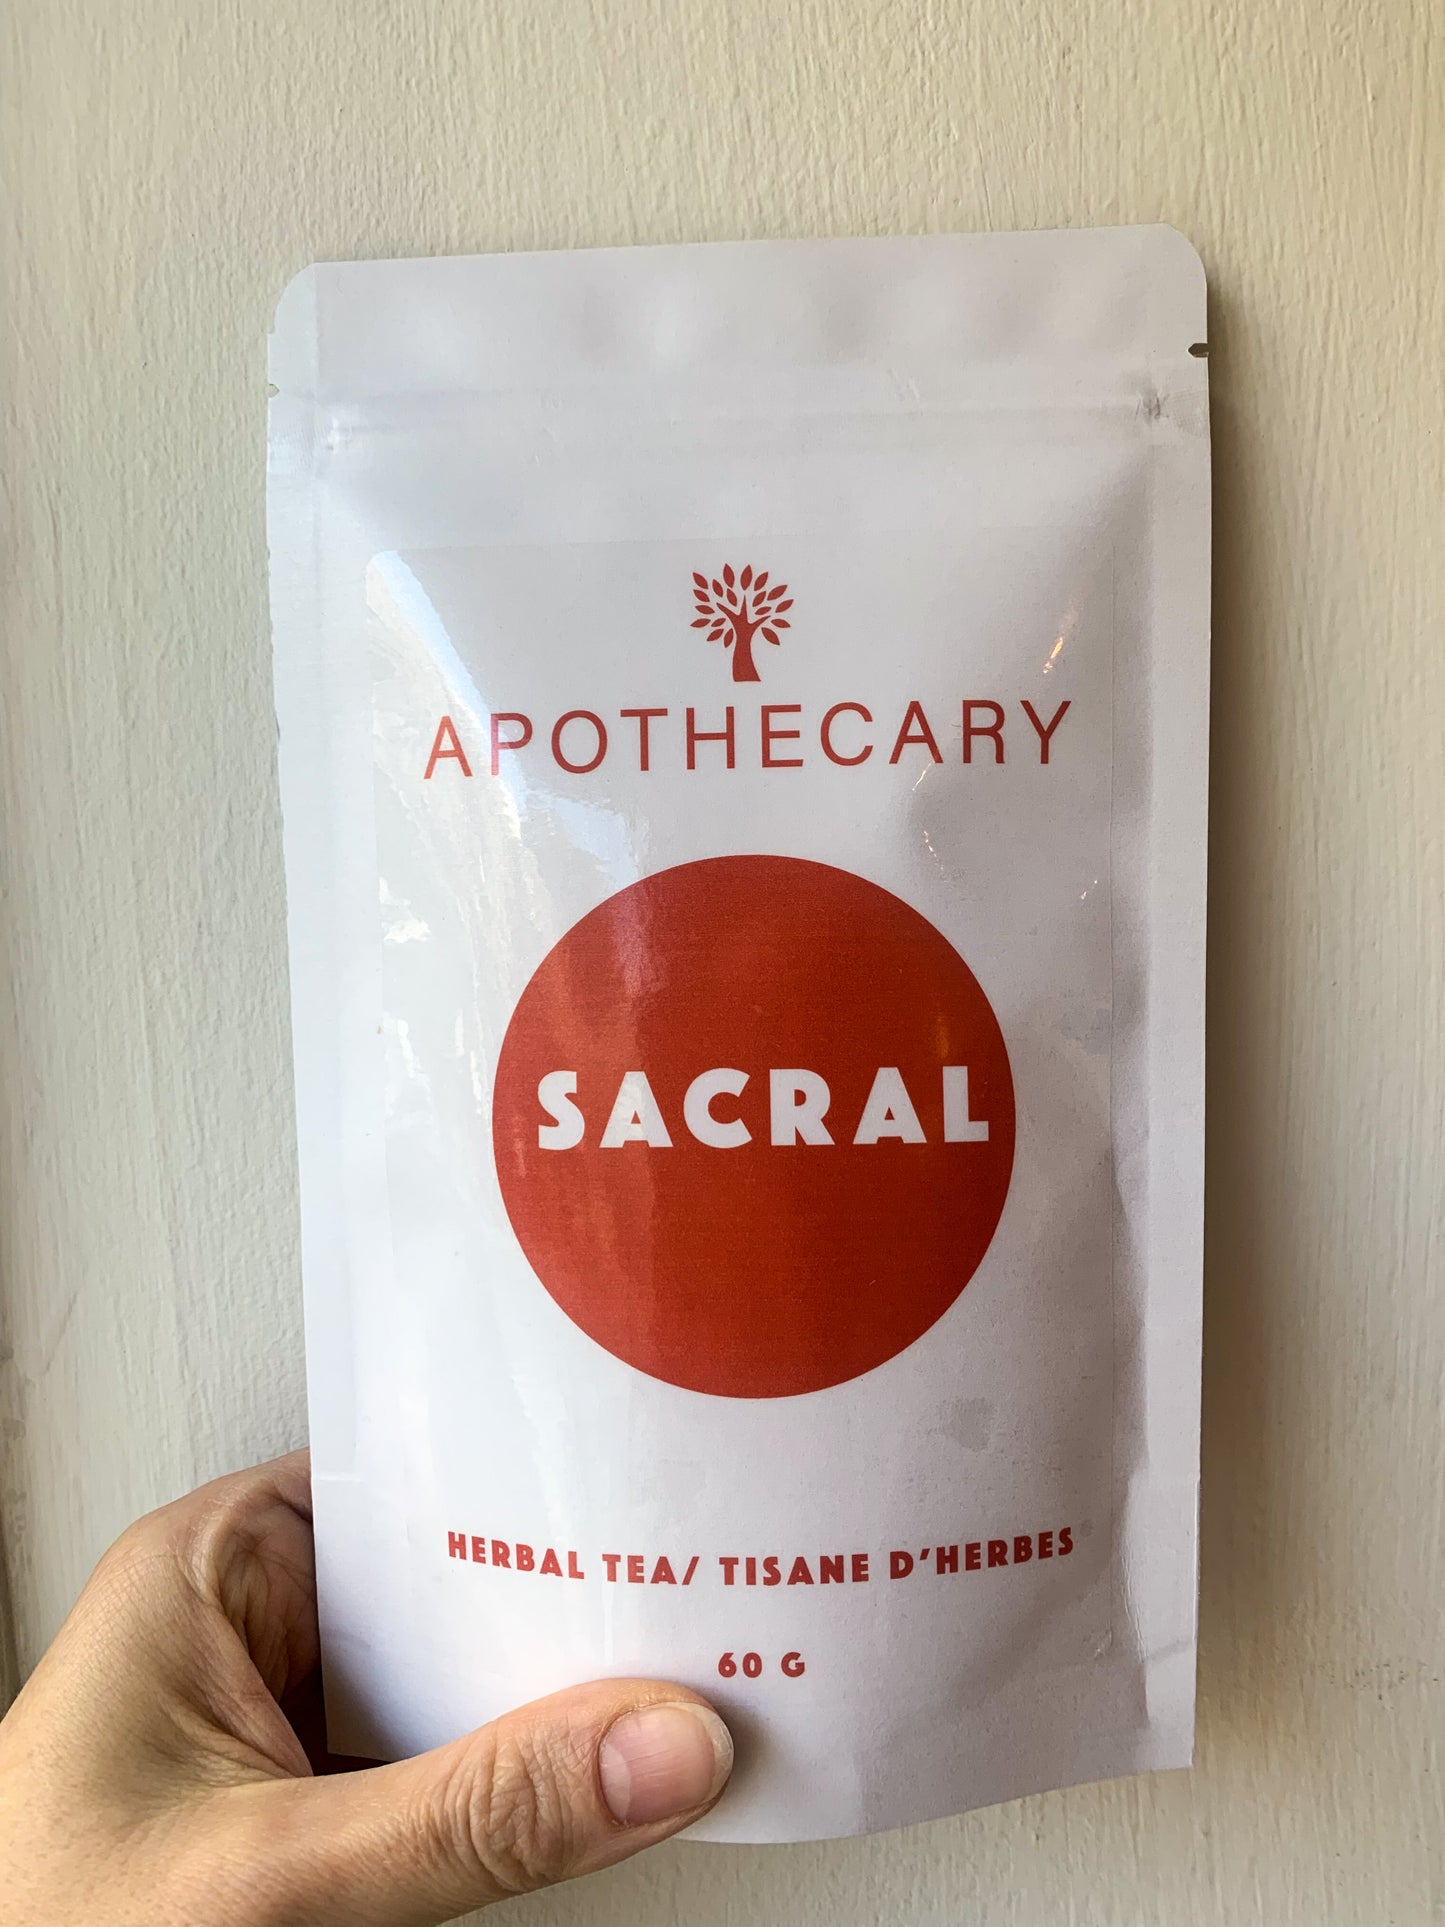 The Apothecary Sacral Herbal Tea